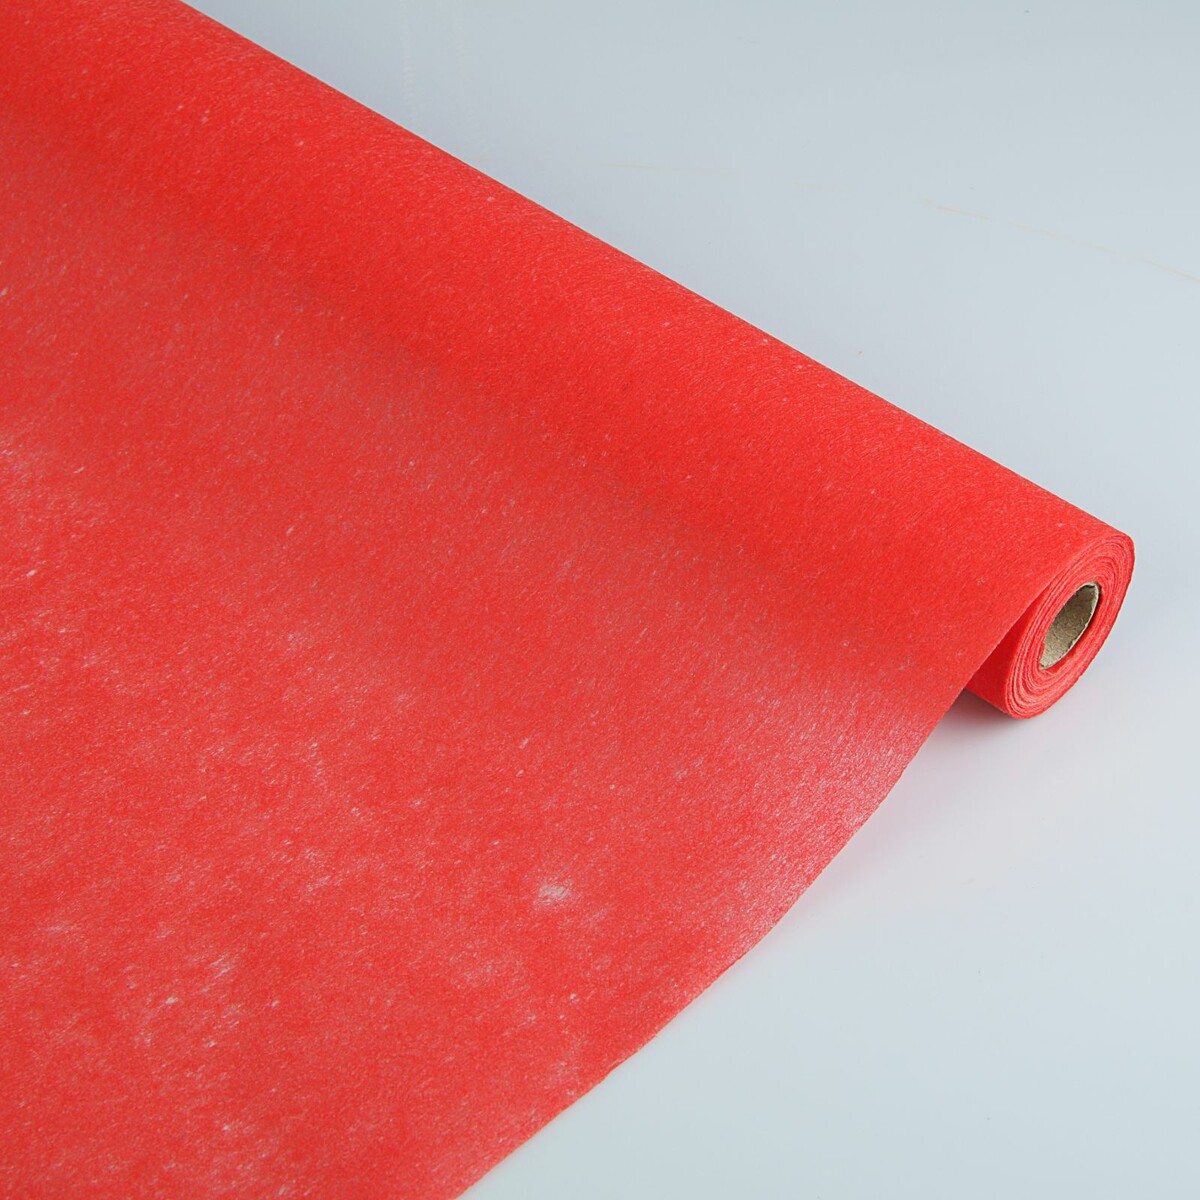 Фетр для упаковок и поделок, однотонный, красный, двусторонний, рулон 1шт., 50 см x 15 м фетр для упаковок и поделок однотонный оливковый двусторонний зеленый рулон 1шт 50 см x 15 м